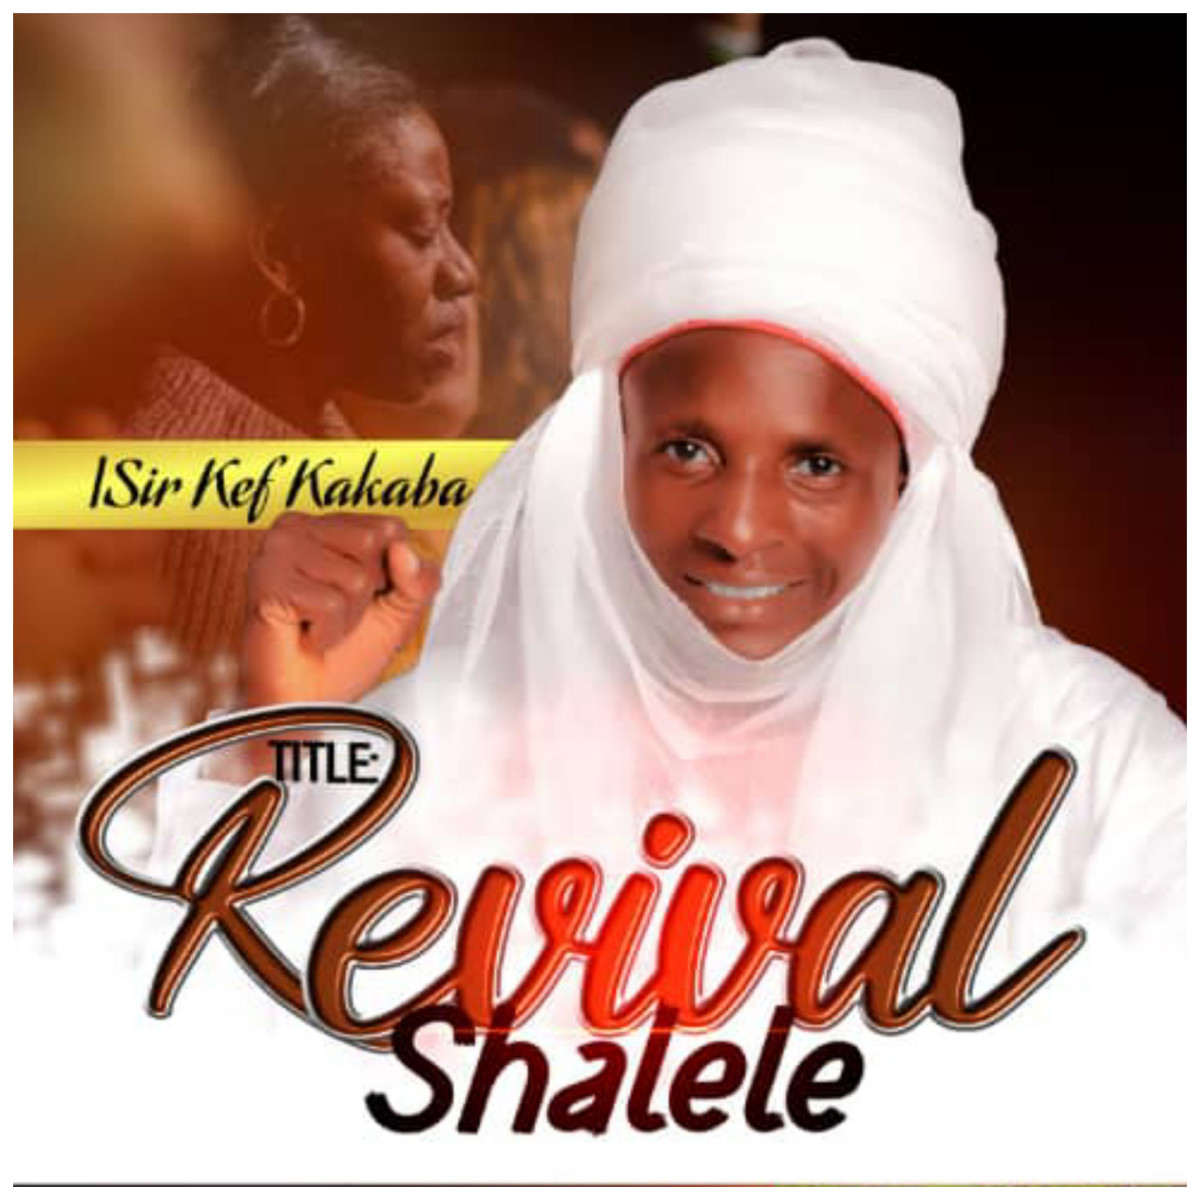 Revival Shalele By Sir Kef Kababa